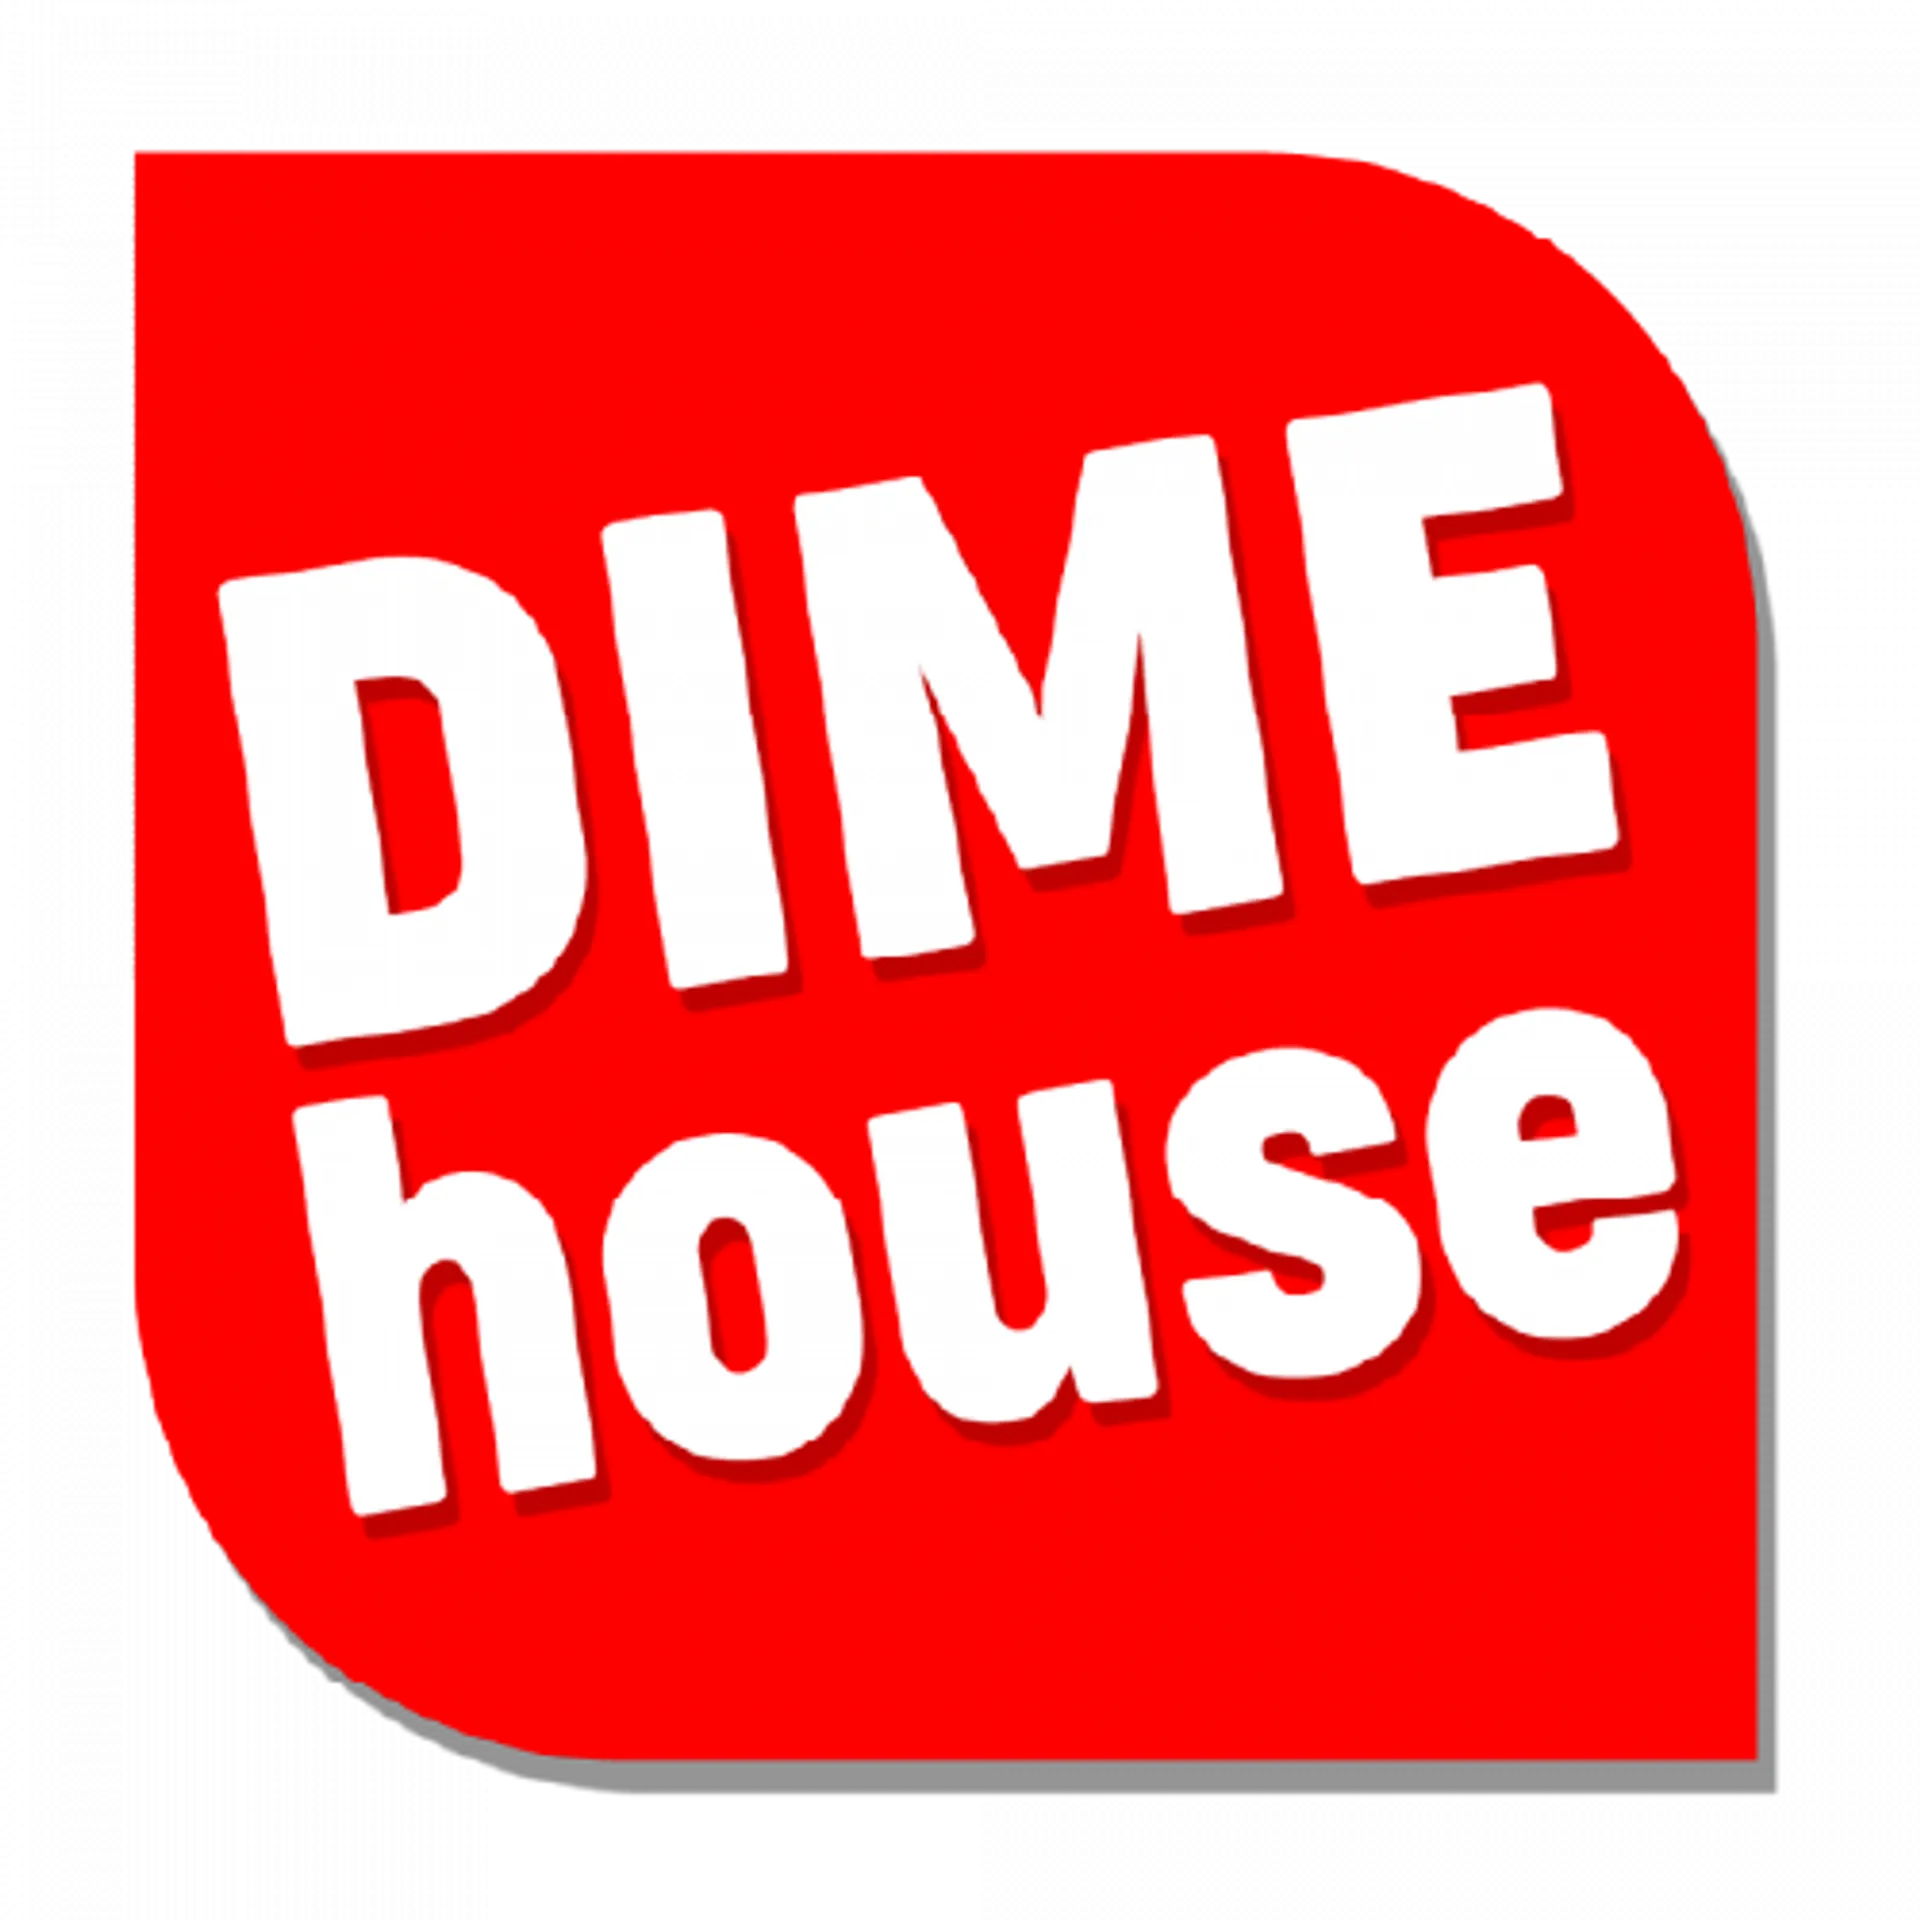 DIMEHOUSE logo in de folder van deze week